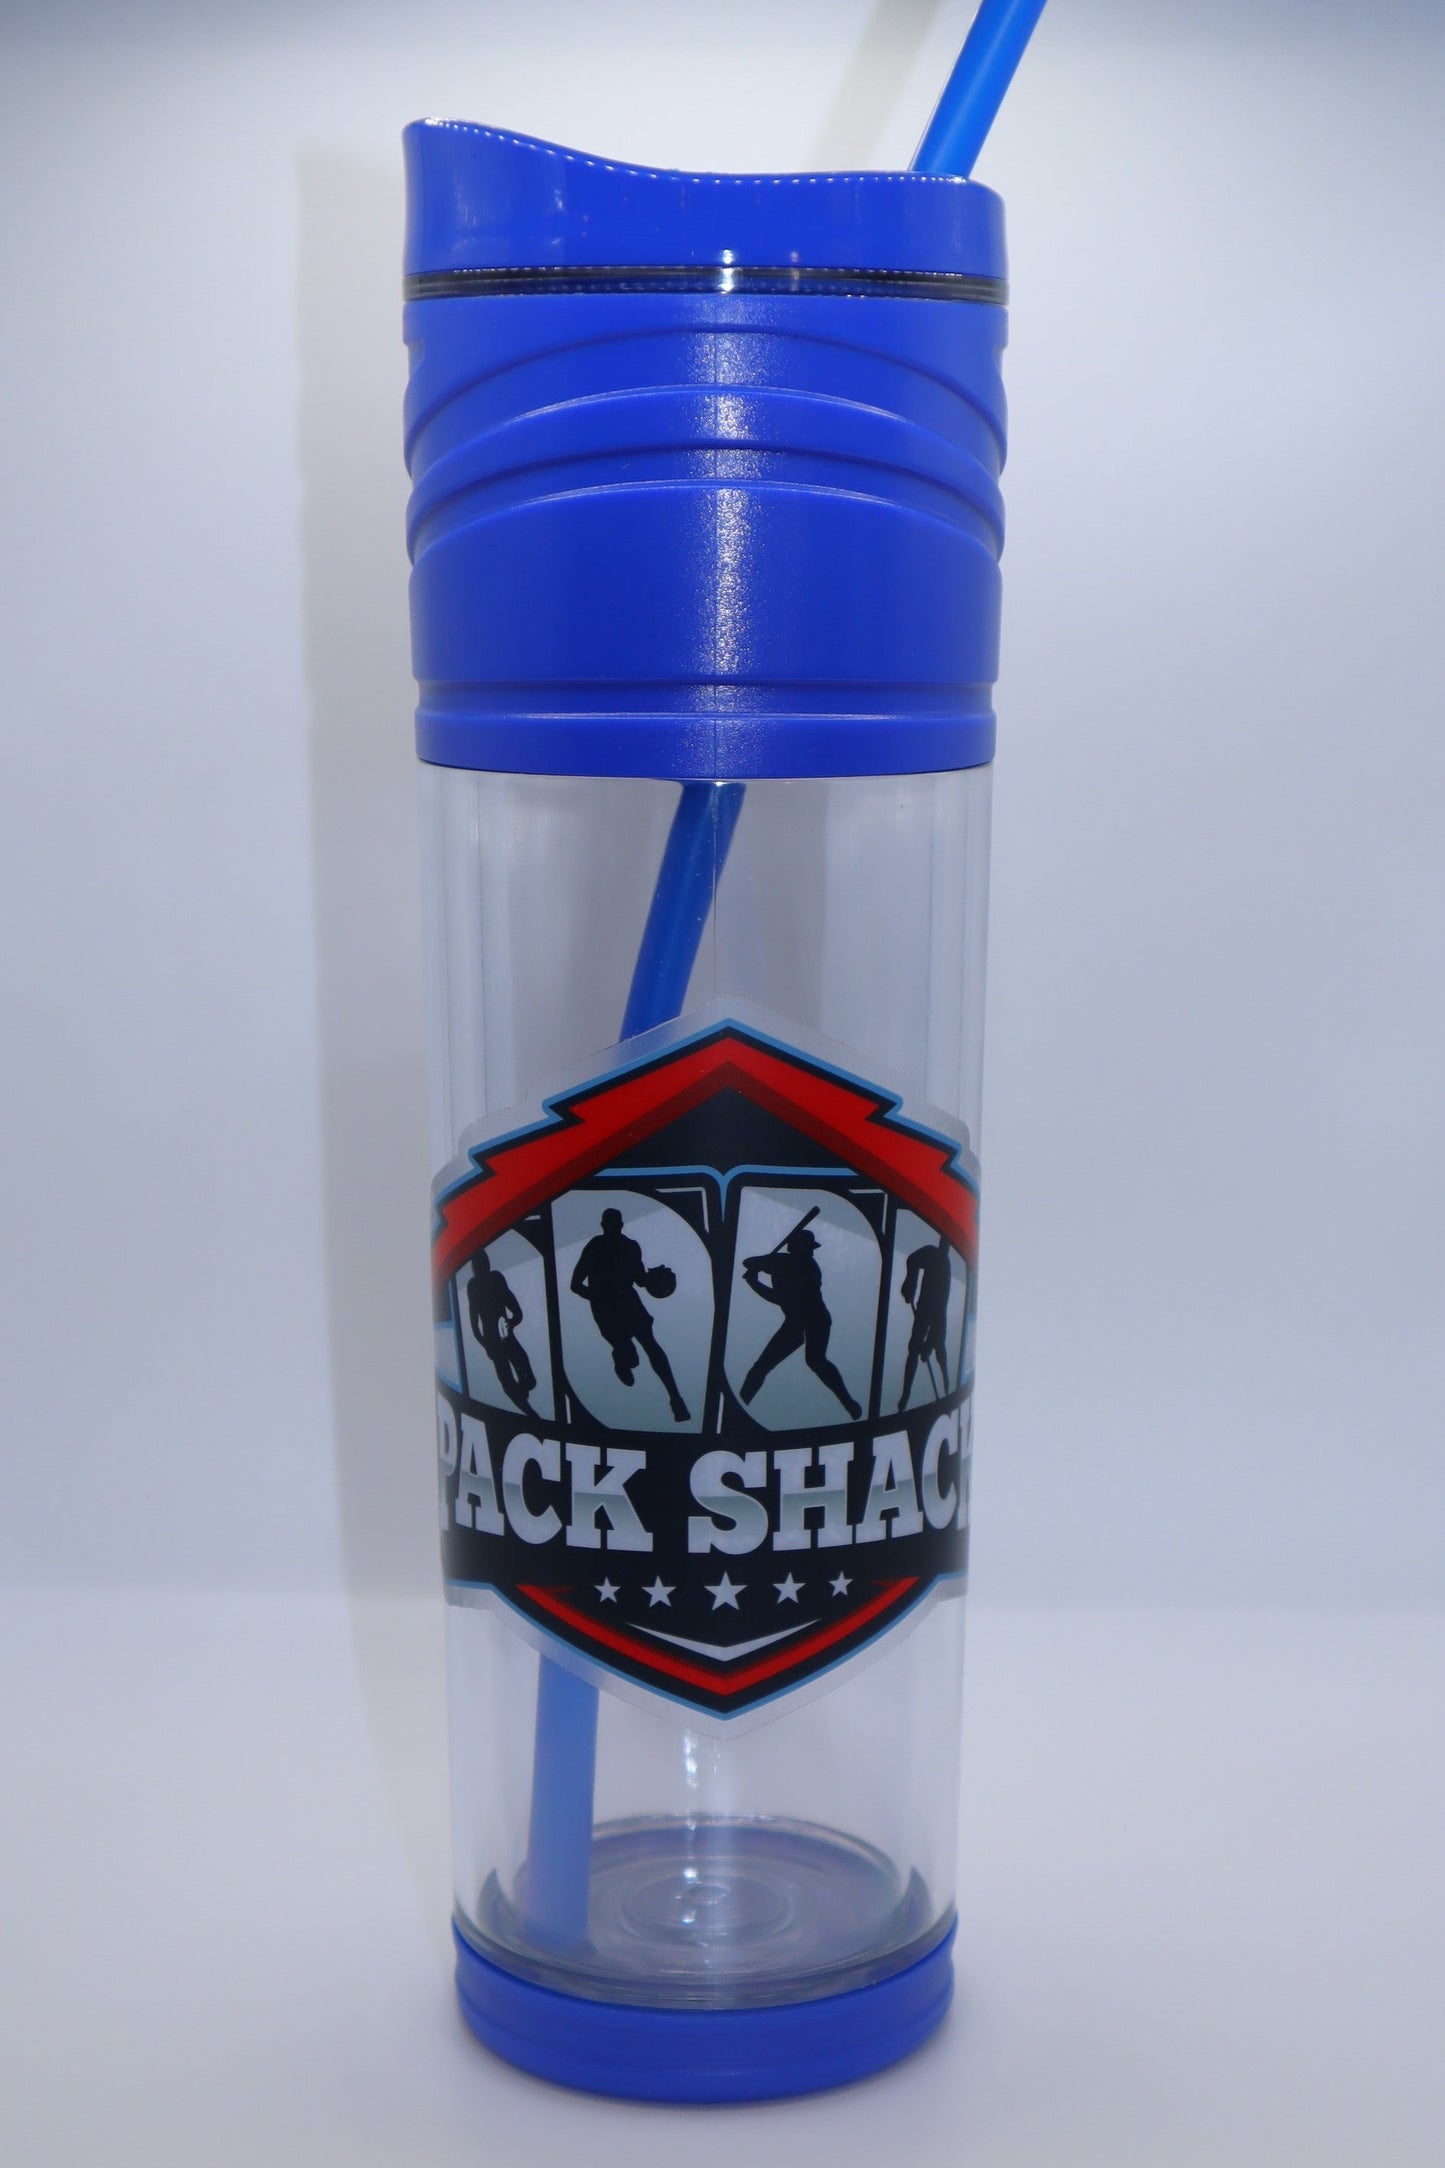 Pack Shack 16oz Acrylic Tumbler w/ Straw - Blue - Merch